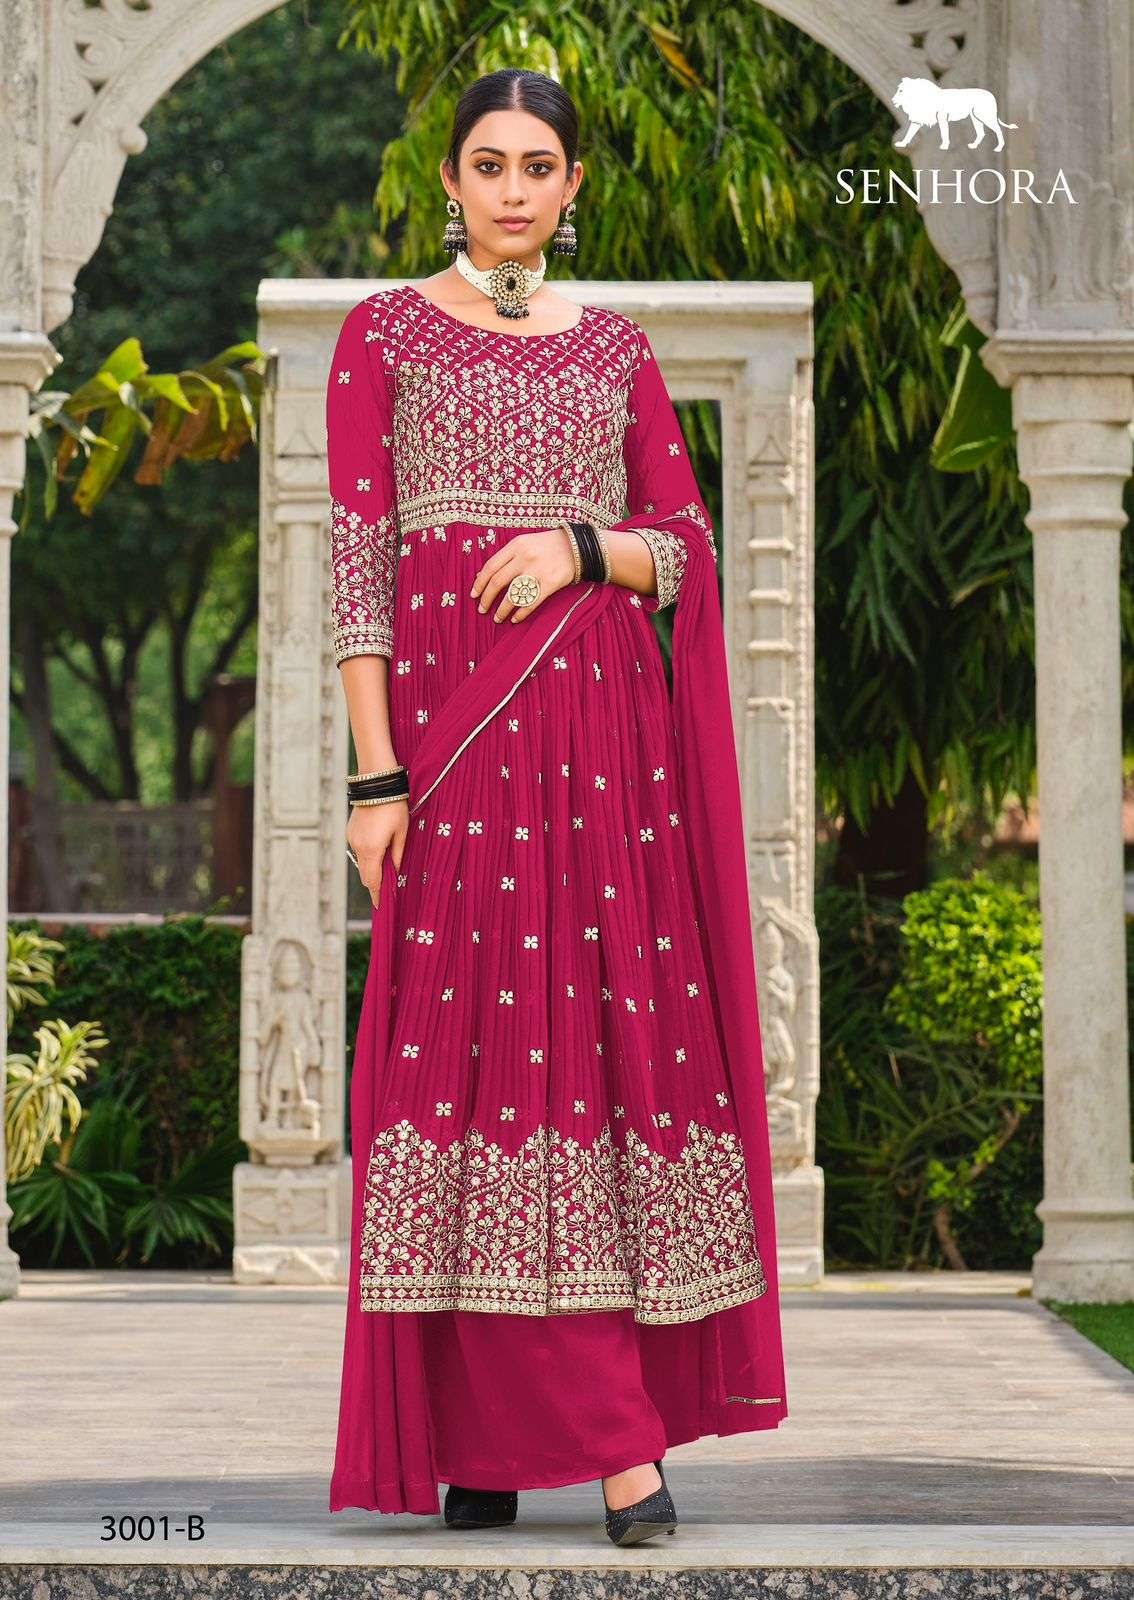 senhora rumana 3001 series stylish look designer salwar suits wholesale surat